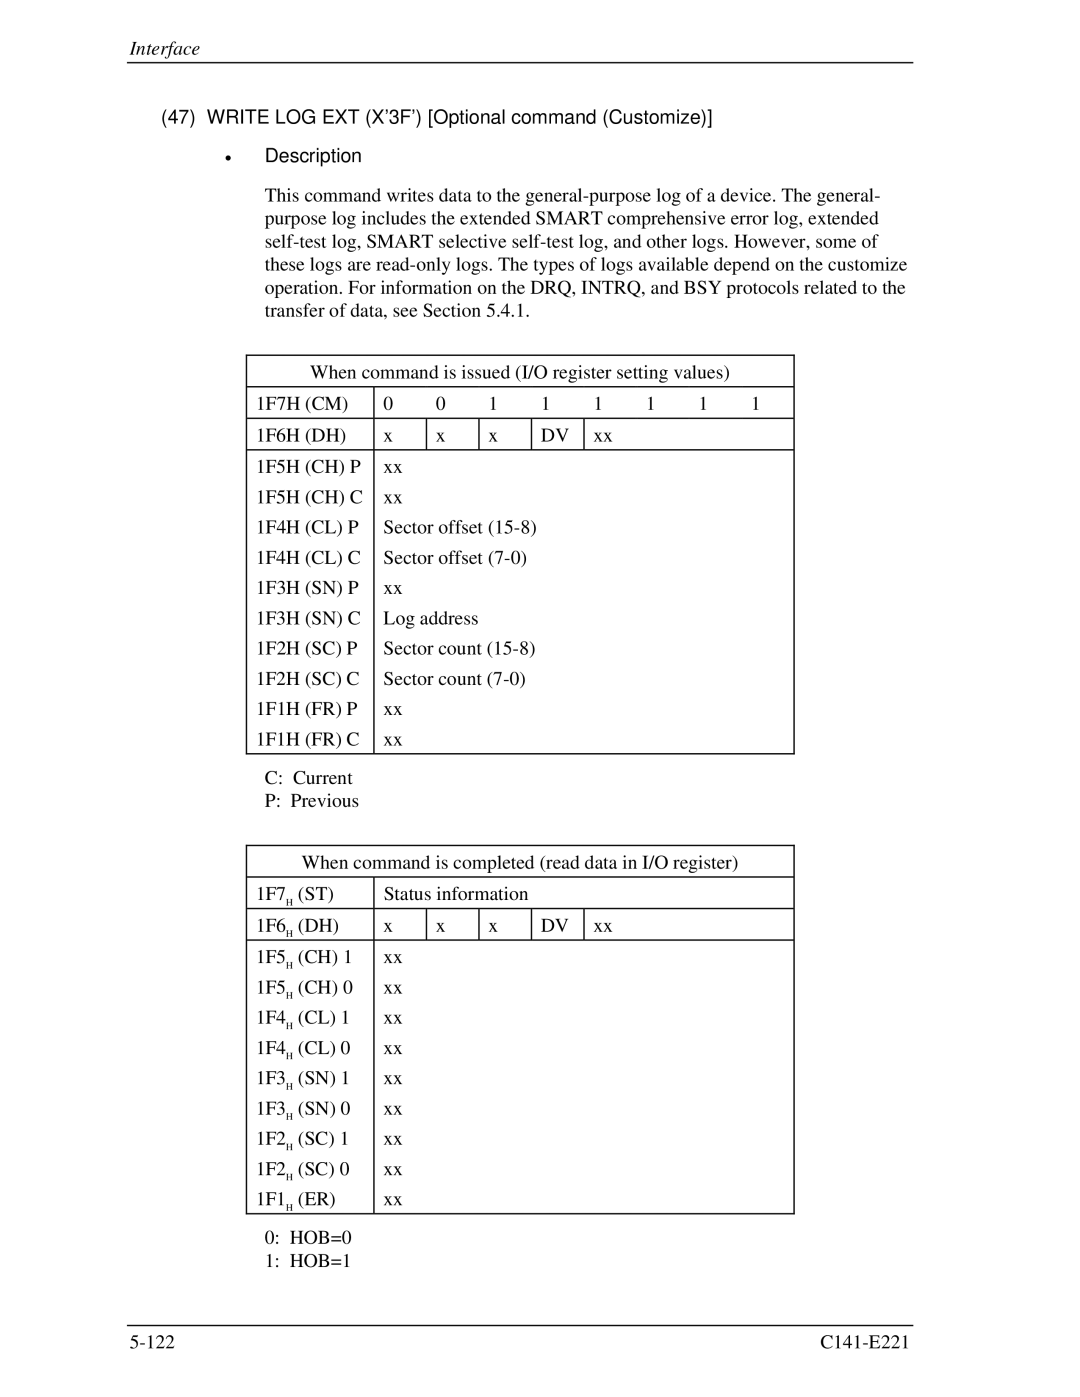 Fujitsu MHV2080AS, MHV2060AS, MHV2040AS manual Write LOG EXT X’3F’ Optional command Customize Description 